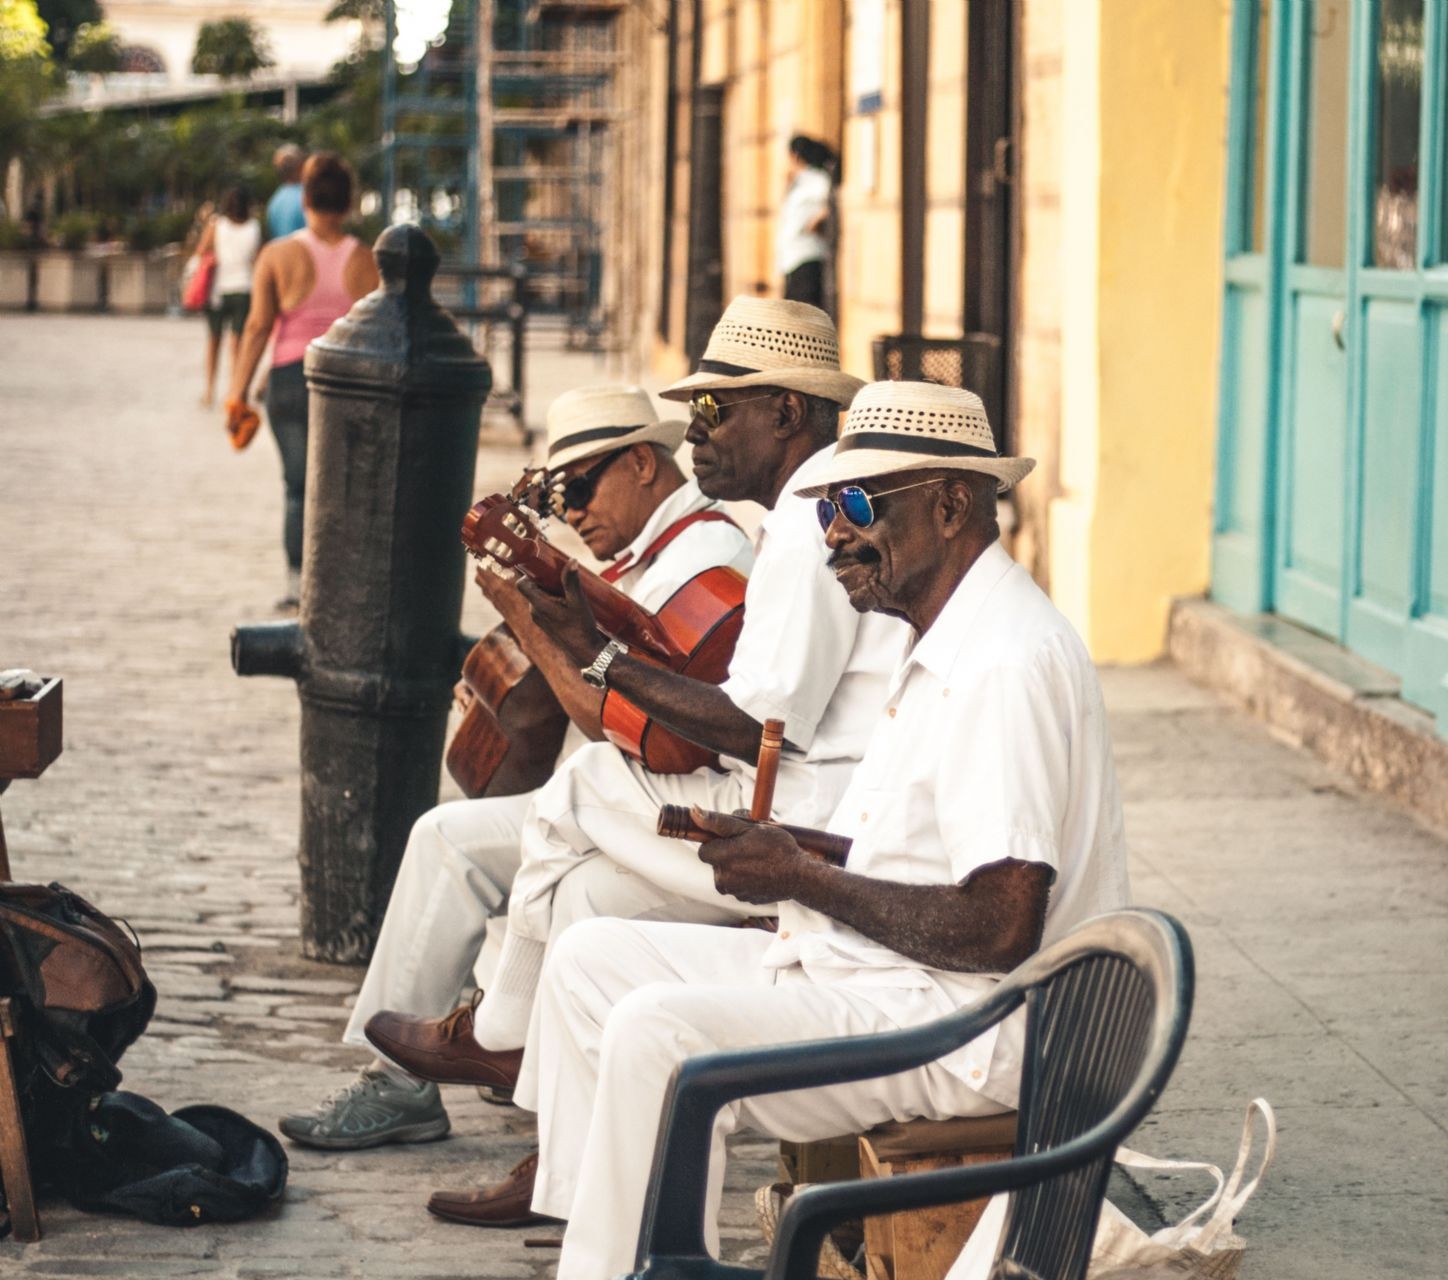 Cuban culture, music, and dance